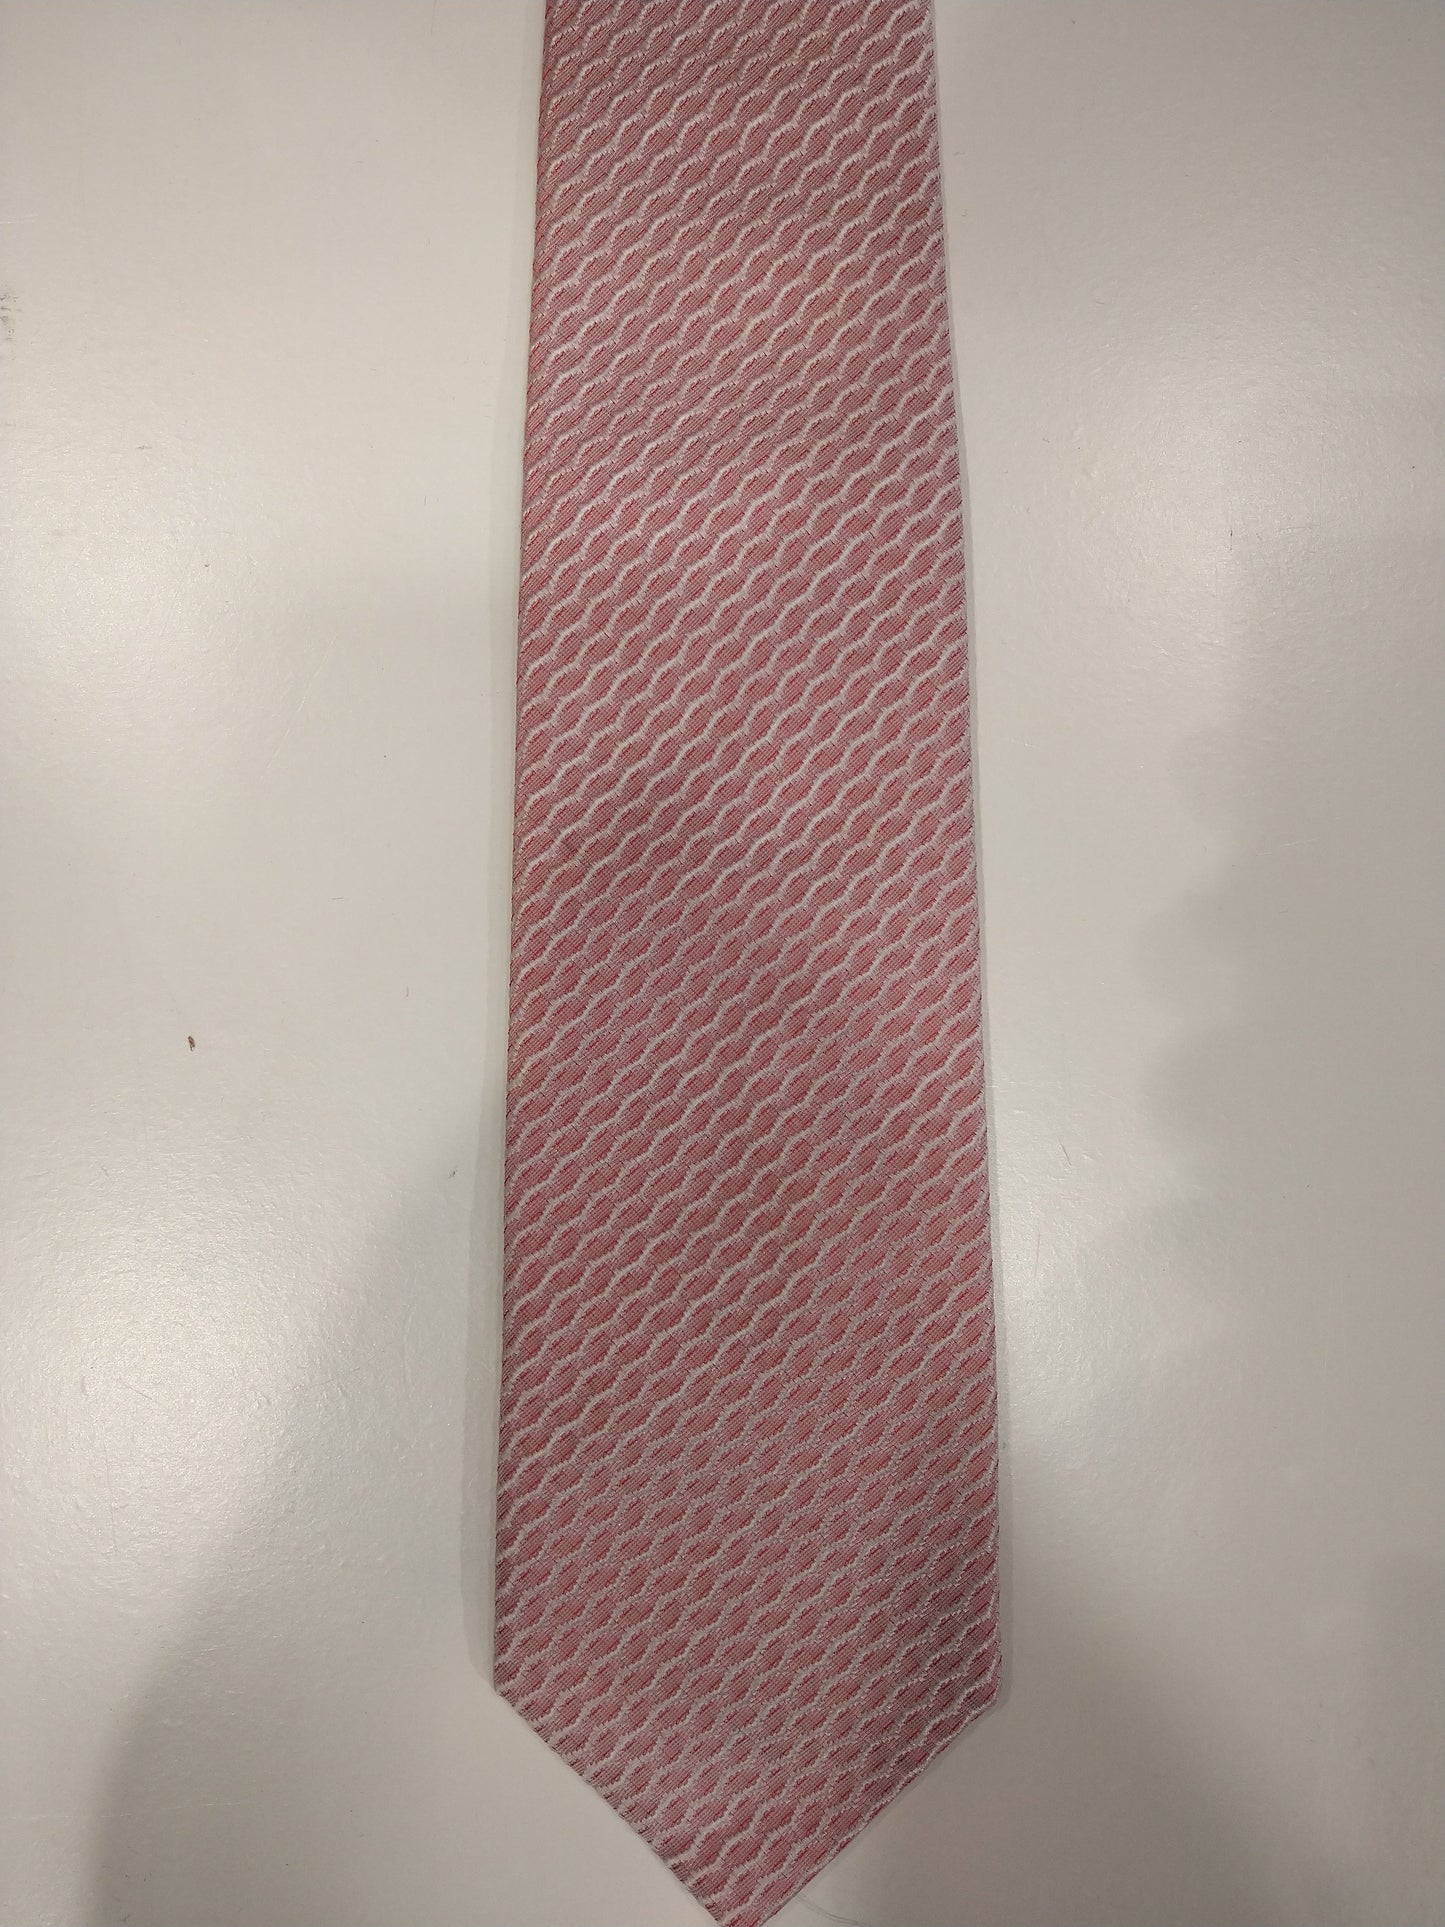 Canda zijde stropdas. Roze wit motief.